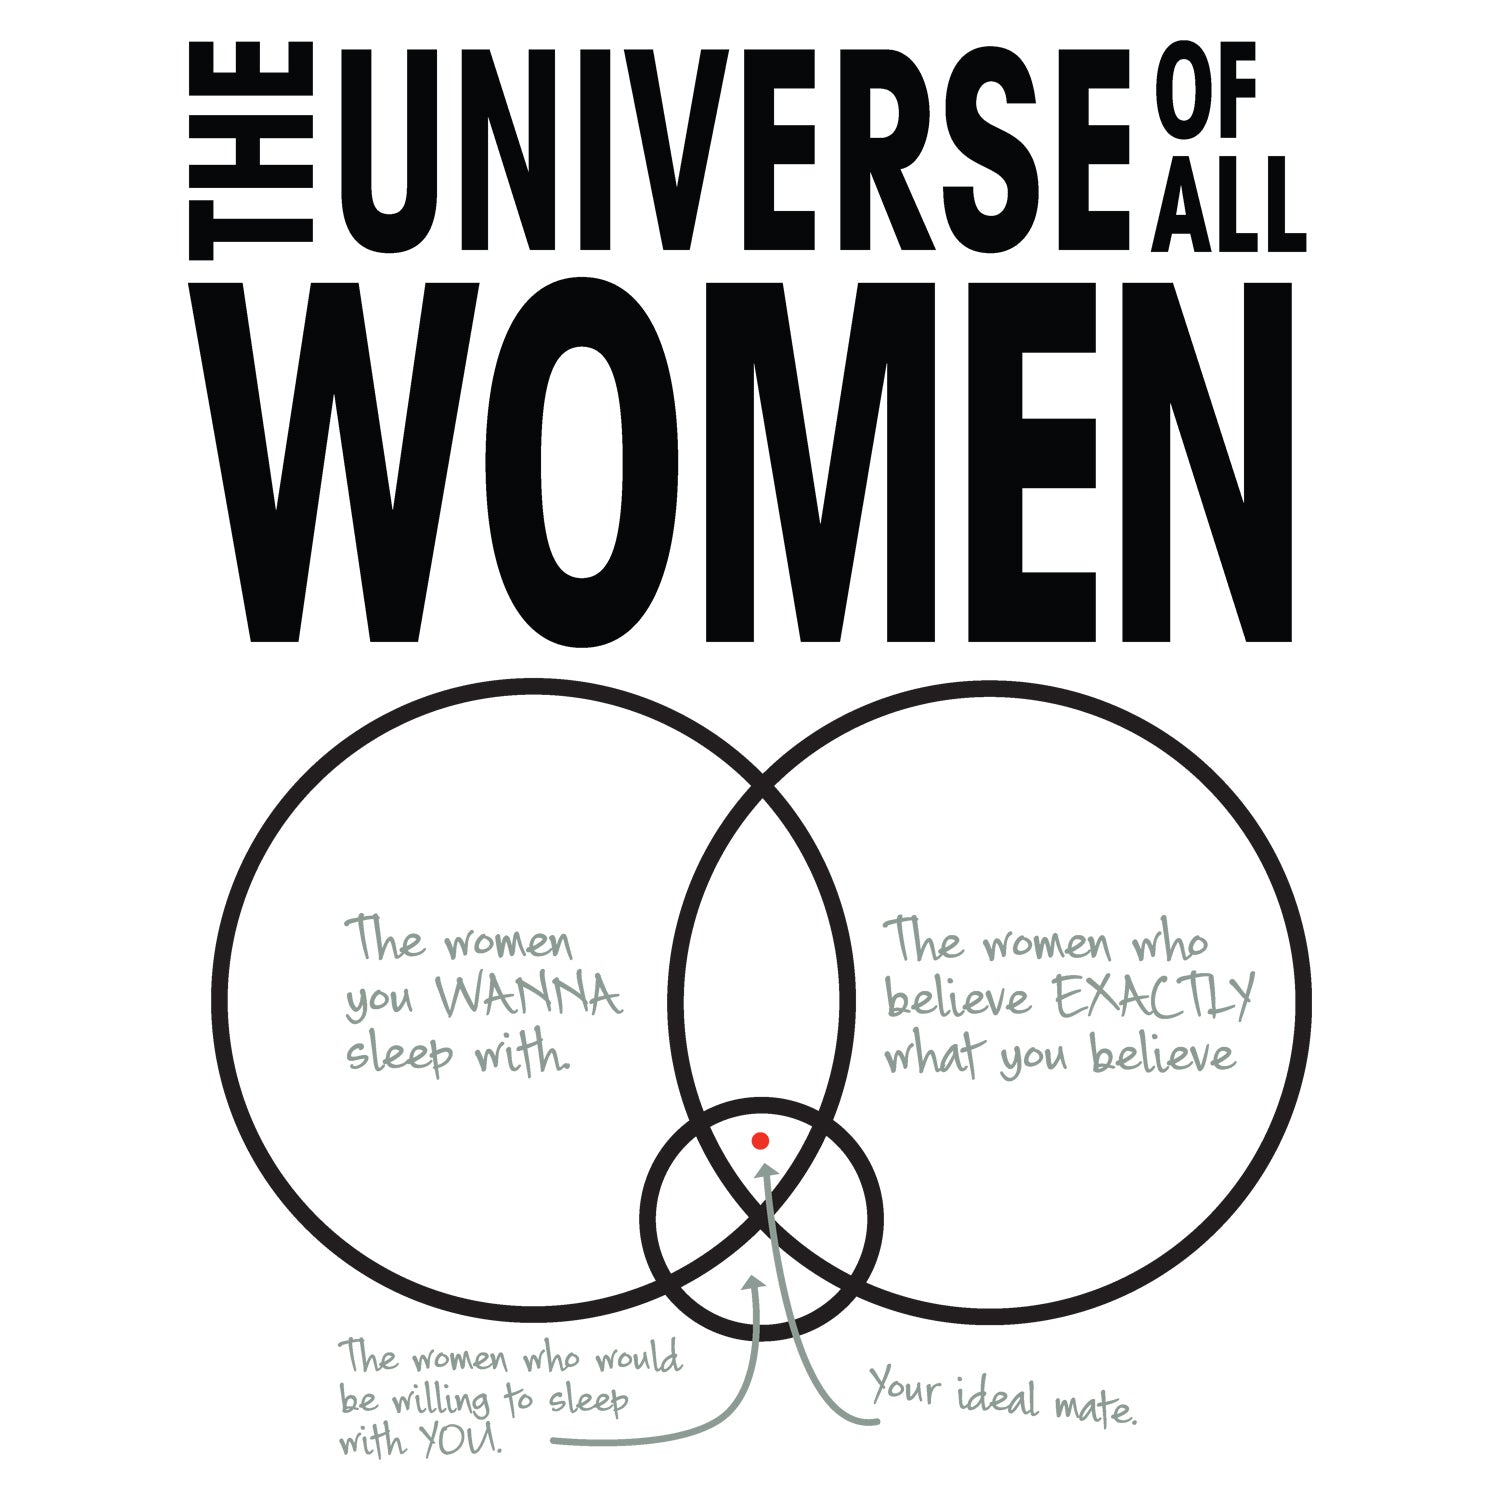 Big Bang Theory Graphic Women Universe Official Men's T-shirt ()